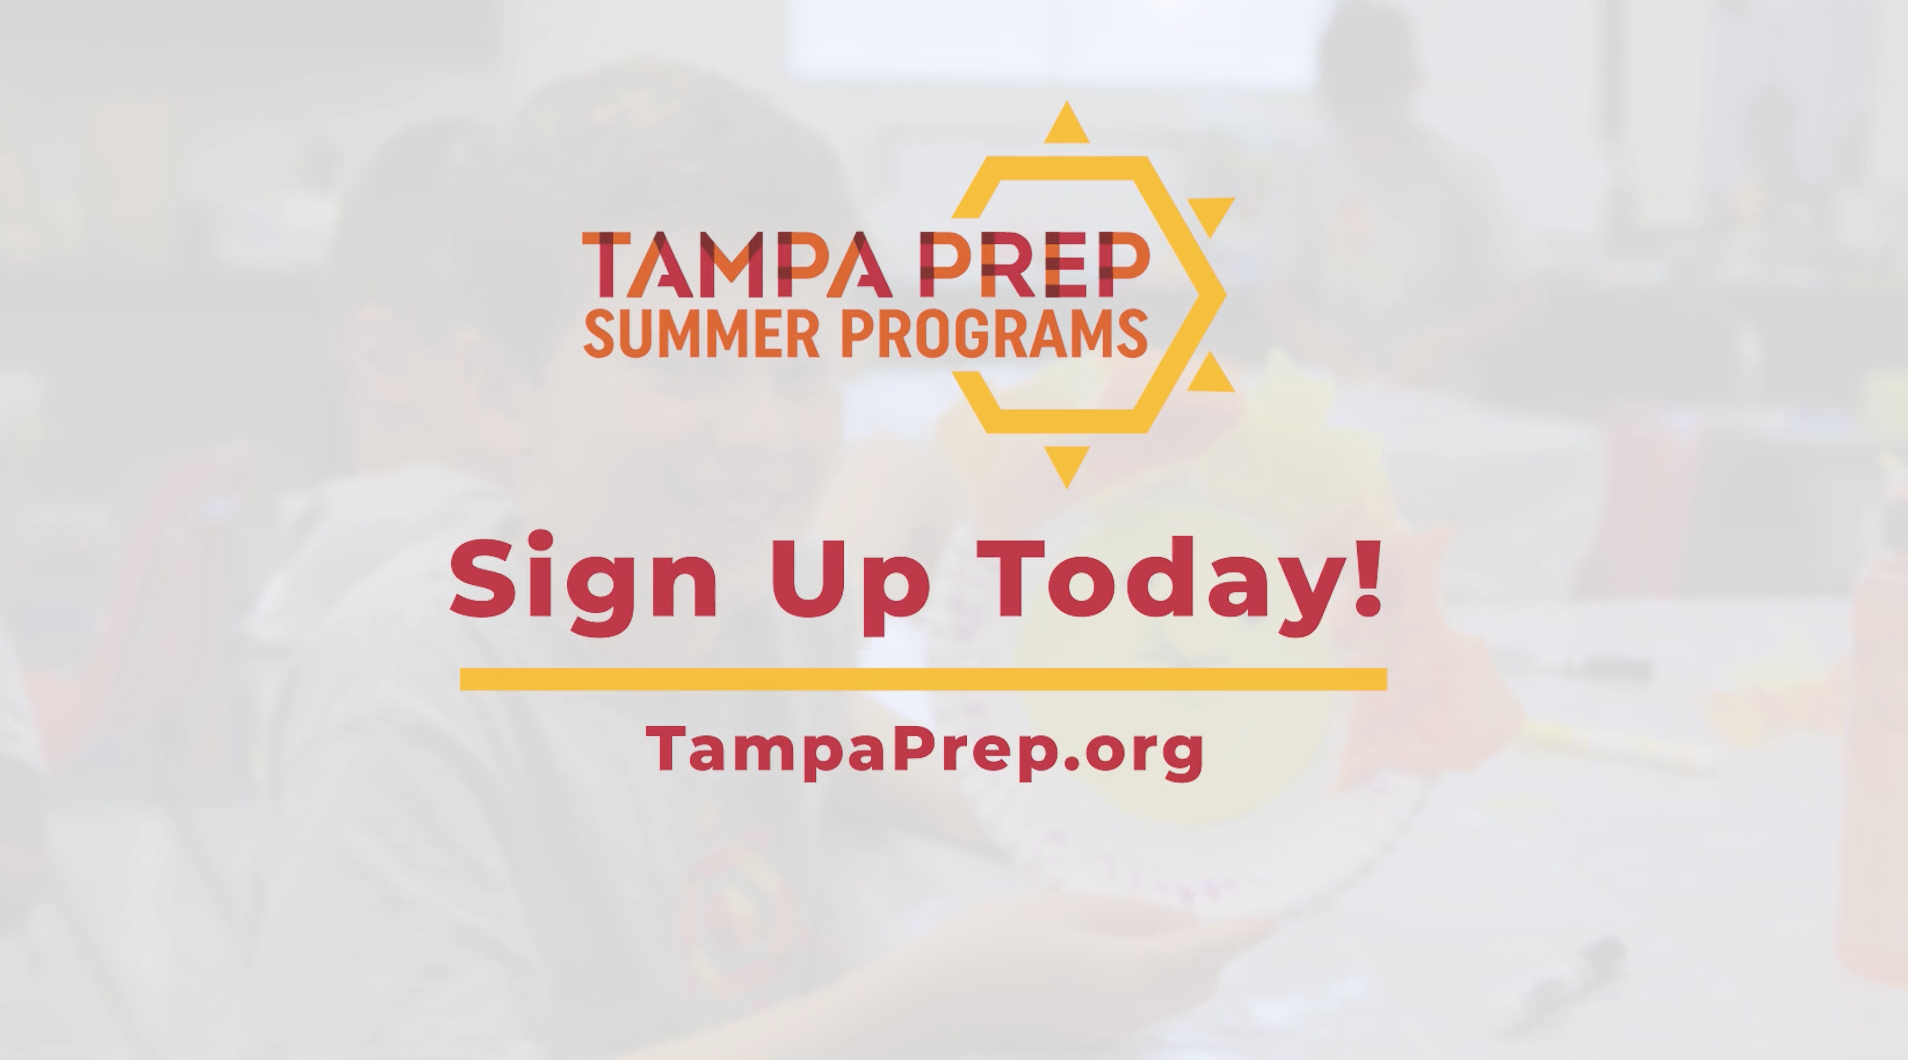 Sign up for Tampa Prep Summer Programs at tampaprep.org